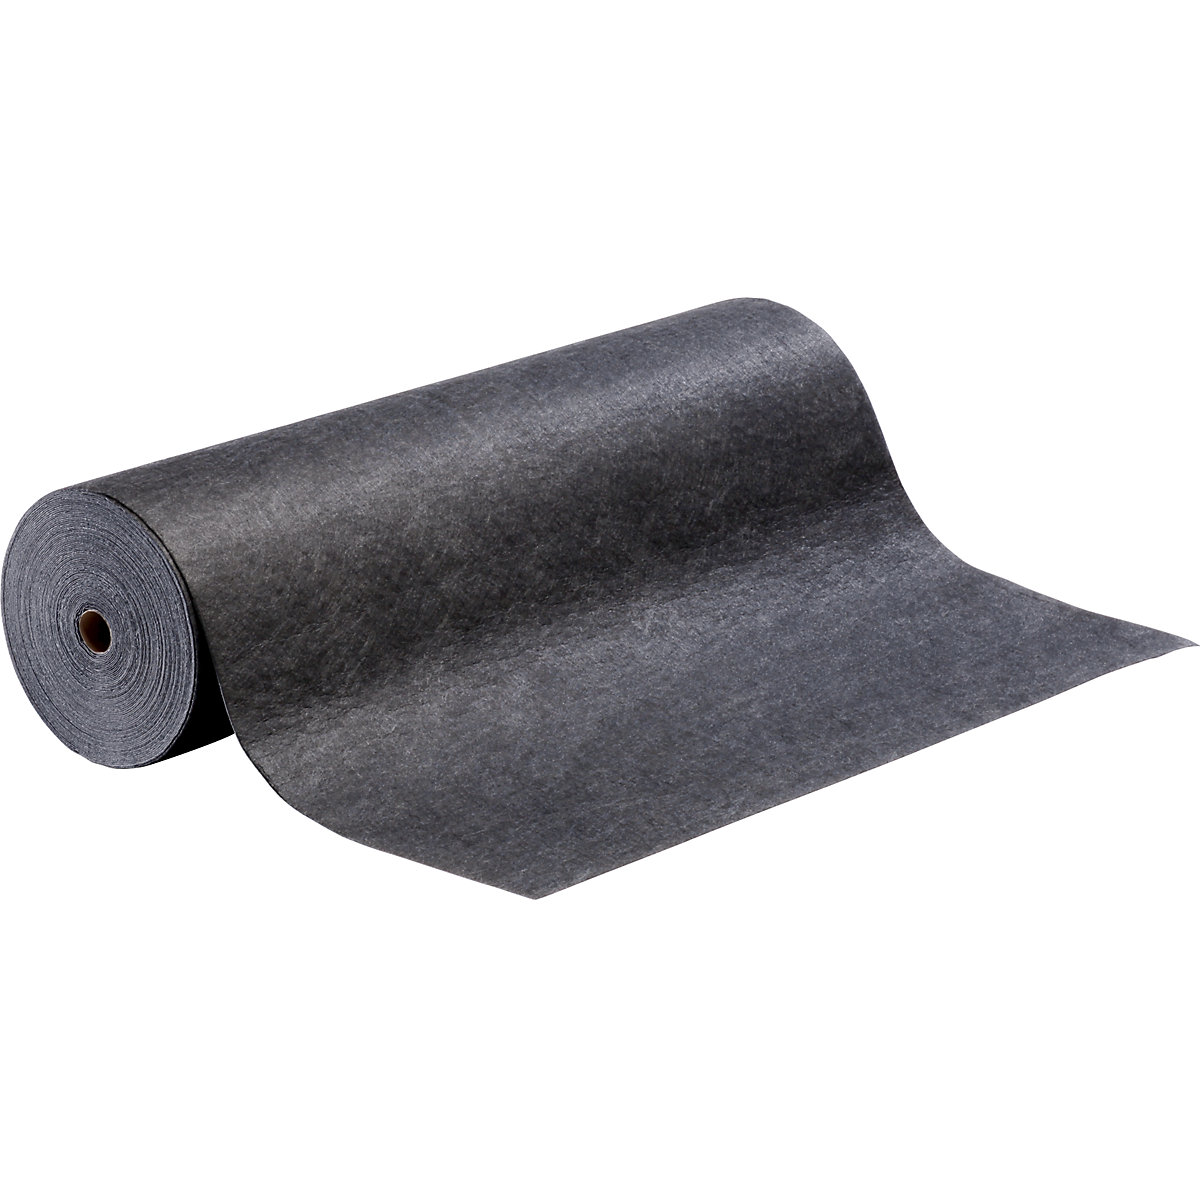 TRAFFIC MAT® absorbent sheeting roll, PE coating - PIG